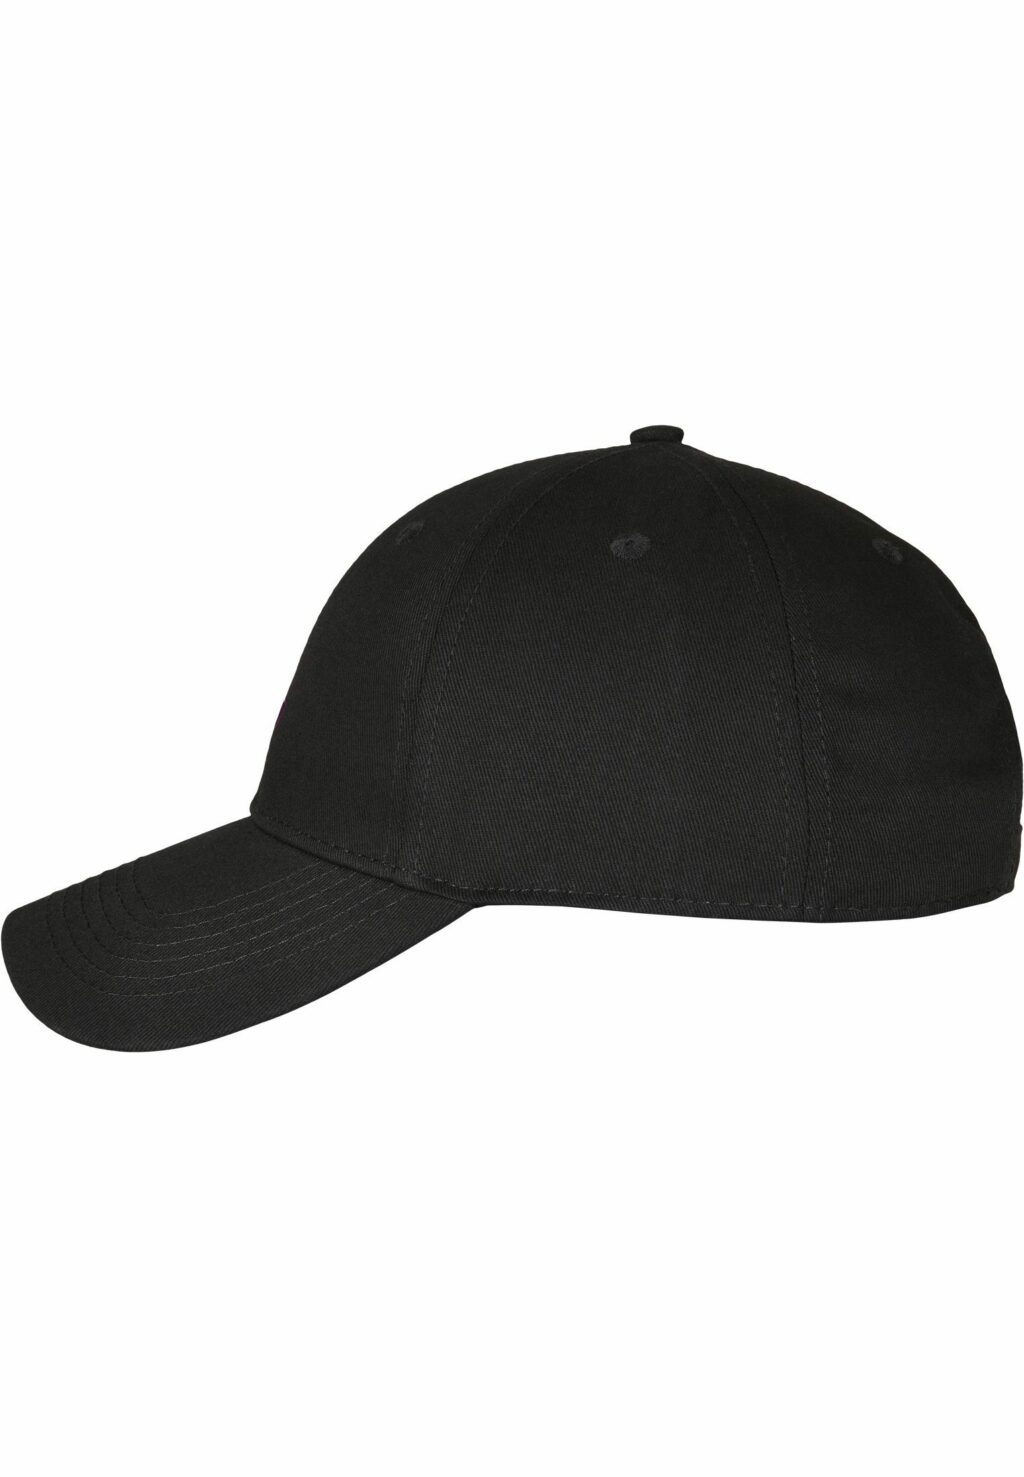 MIA PAPI Curved Cap black/mc one CS2495